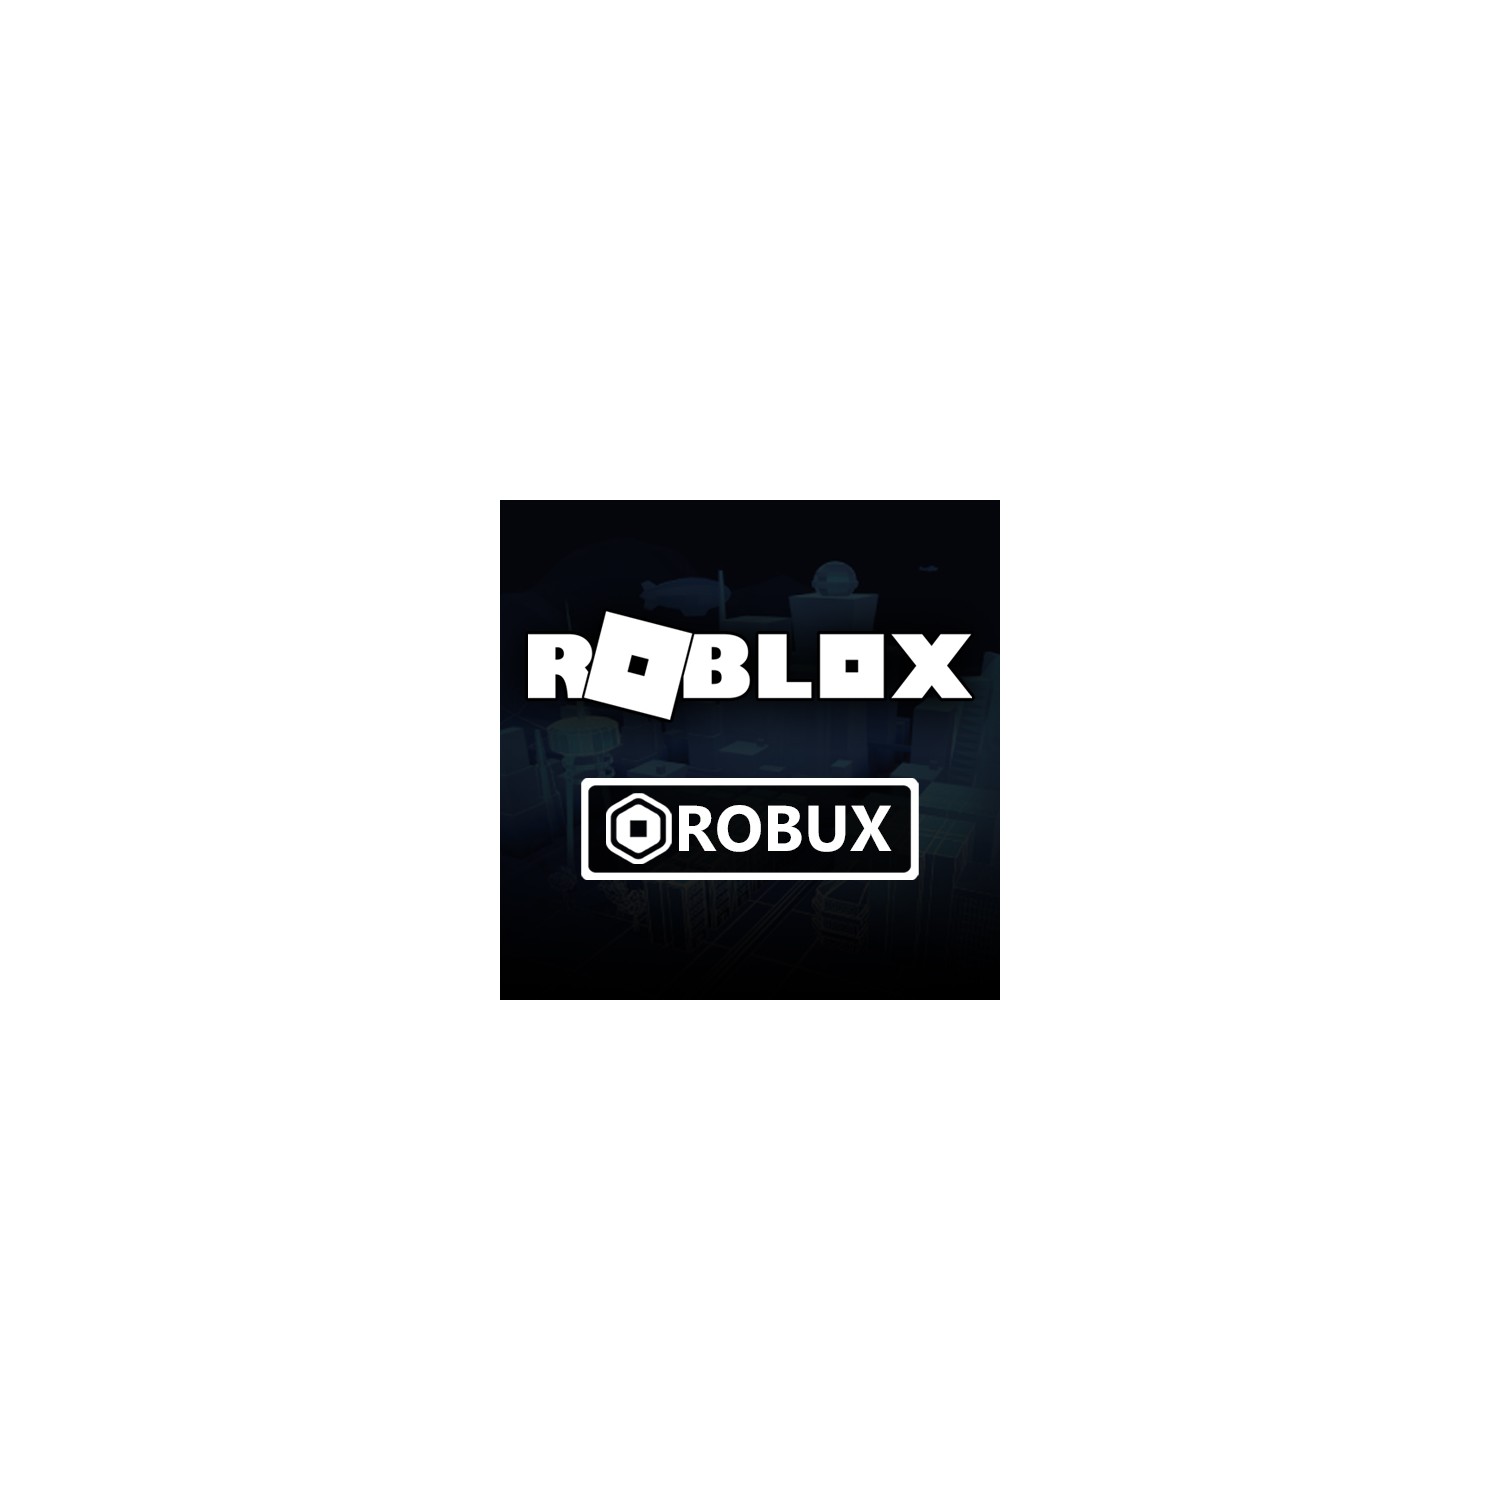 Roblox 800 Robux Yorumlari - roblox robux verme